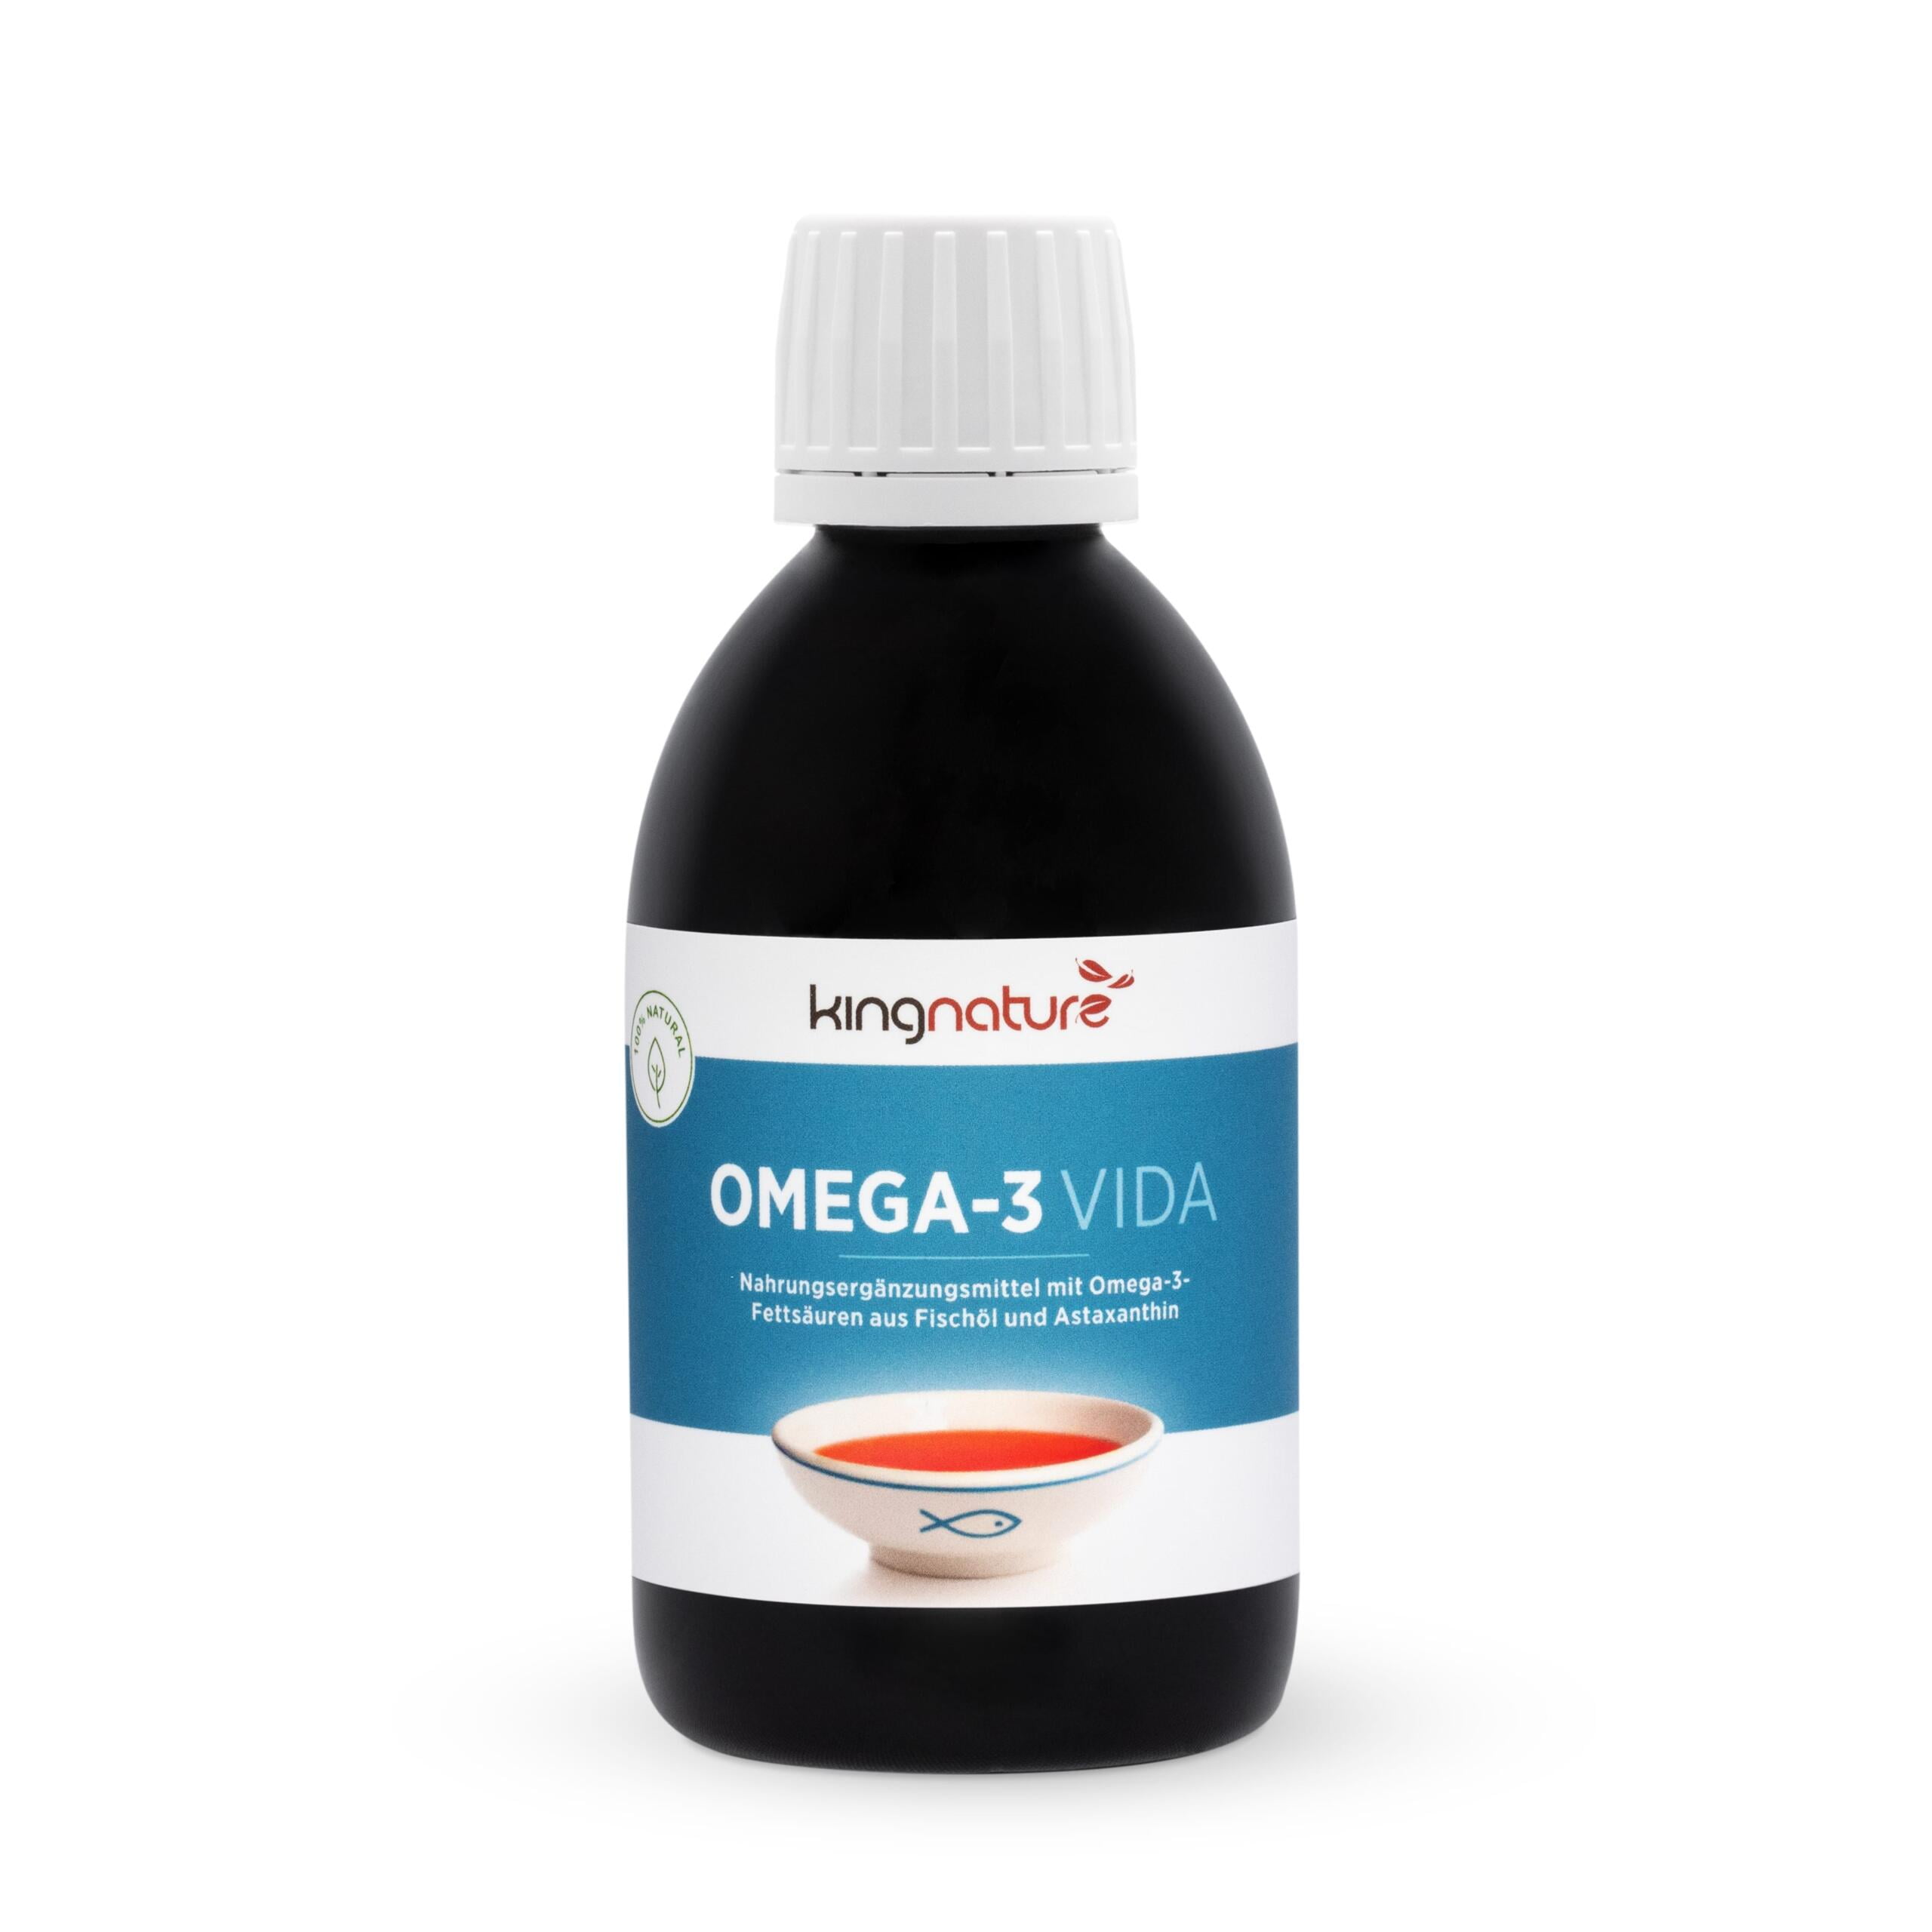 Omega-3 Vida